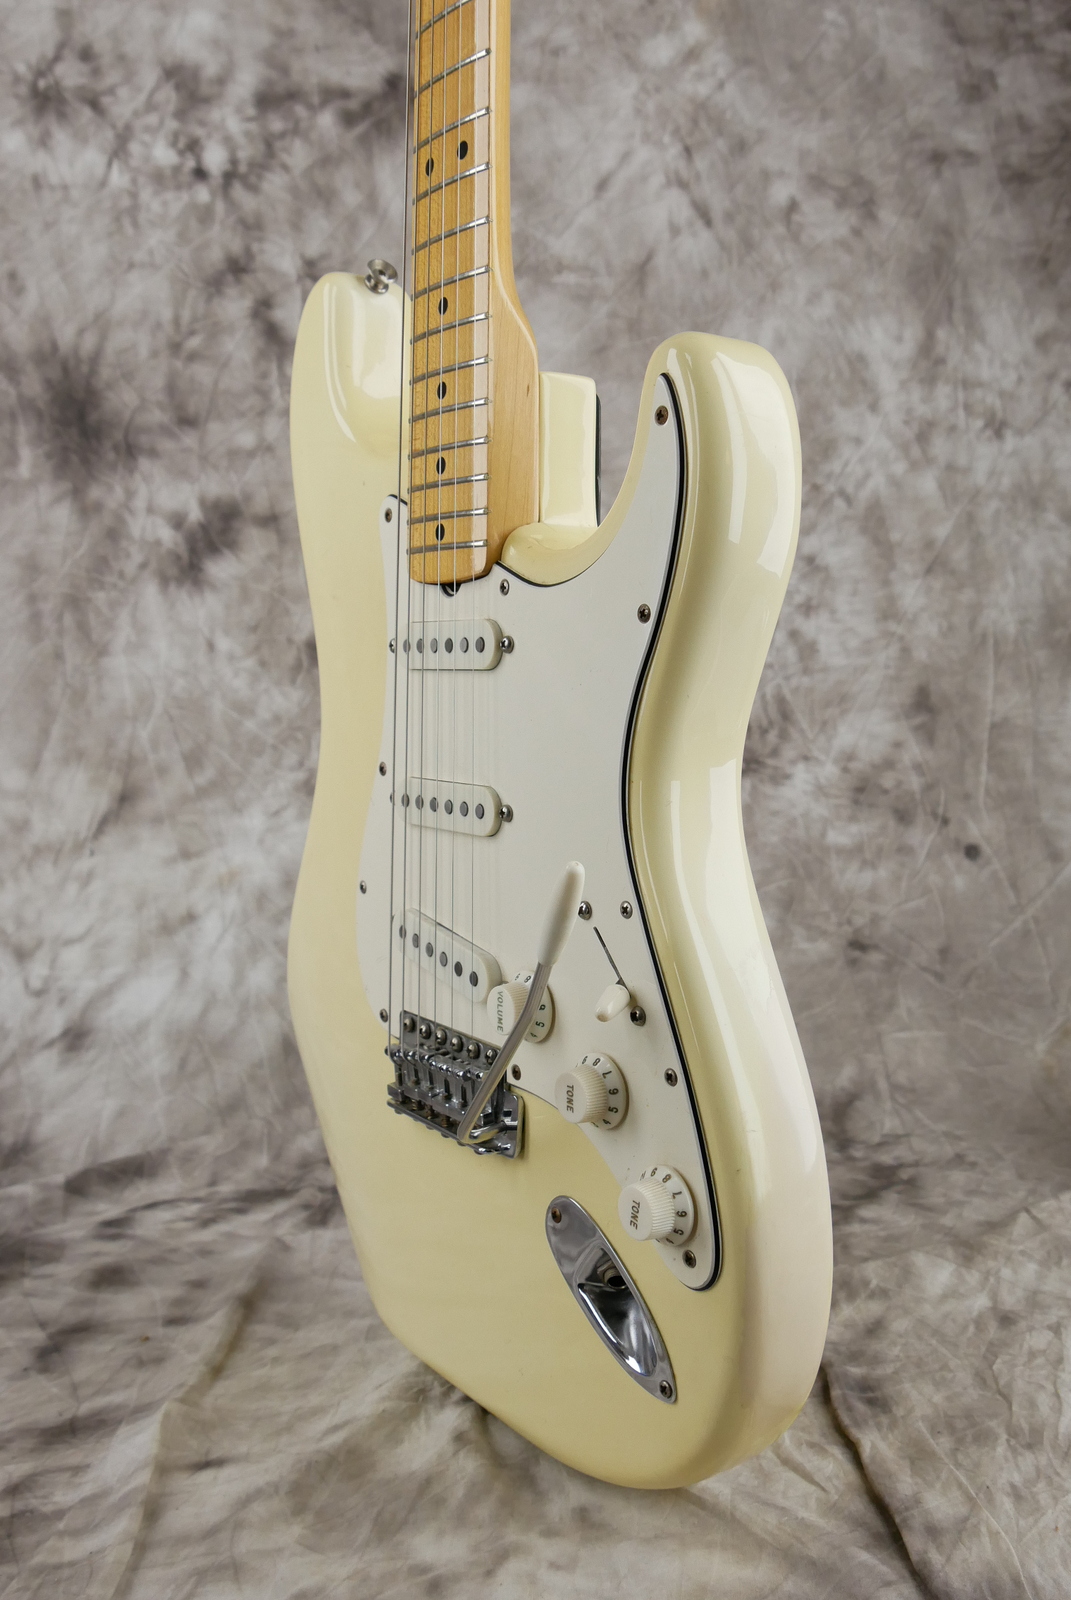 Fender_Stratocaster_Dan_smith_1982_tremolo_hardcase-006.JPG